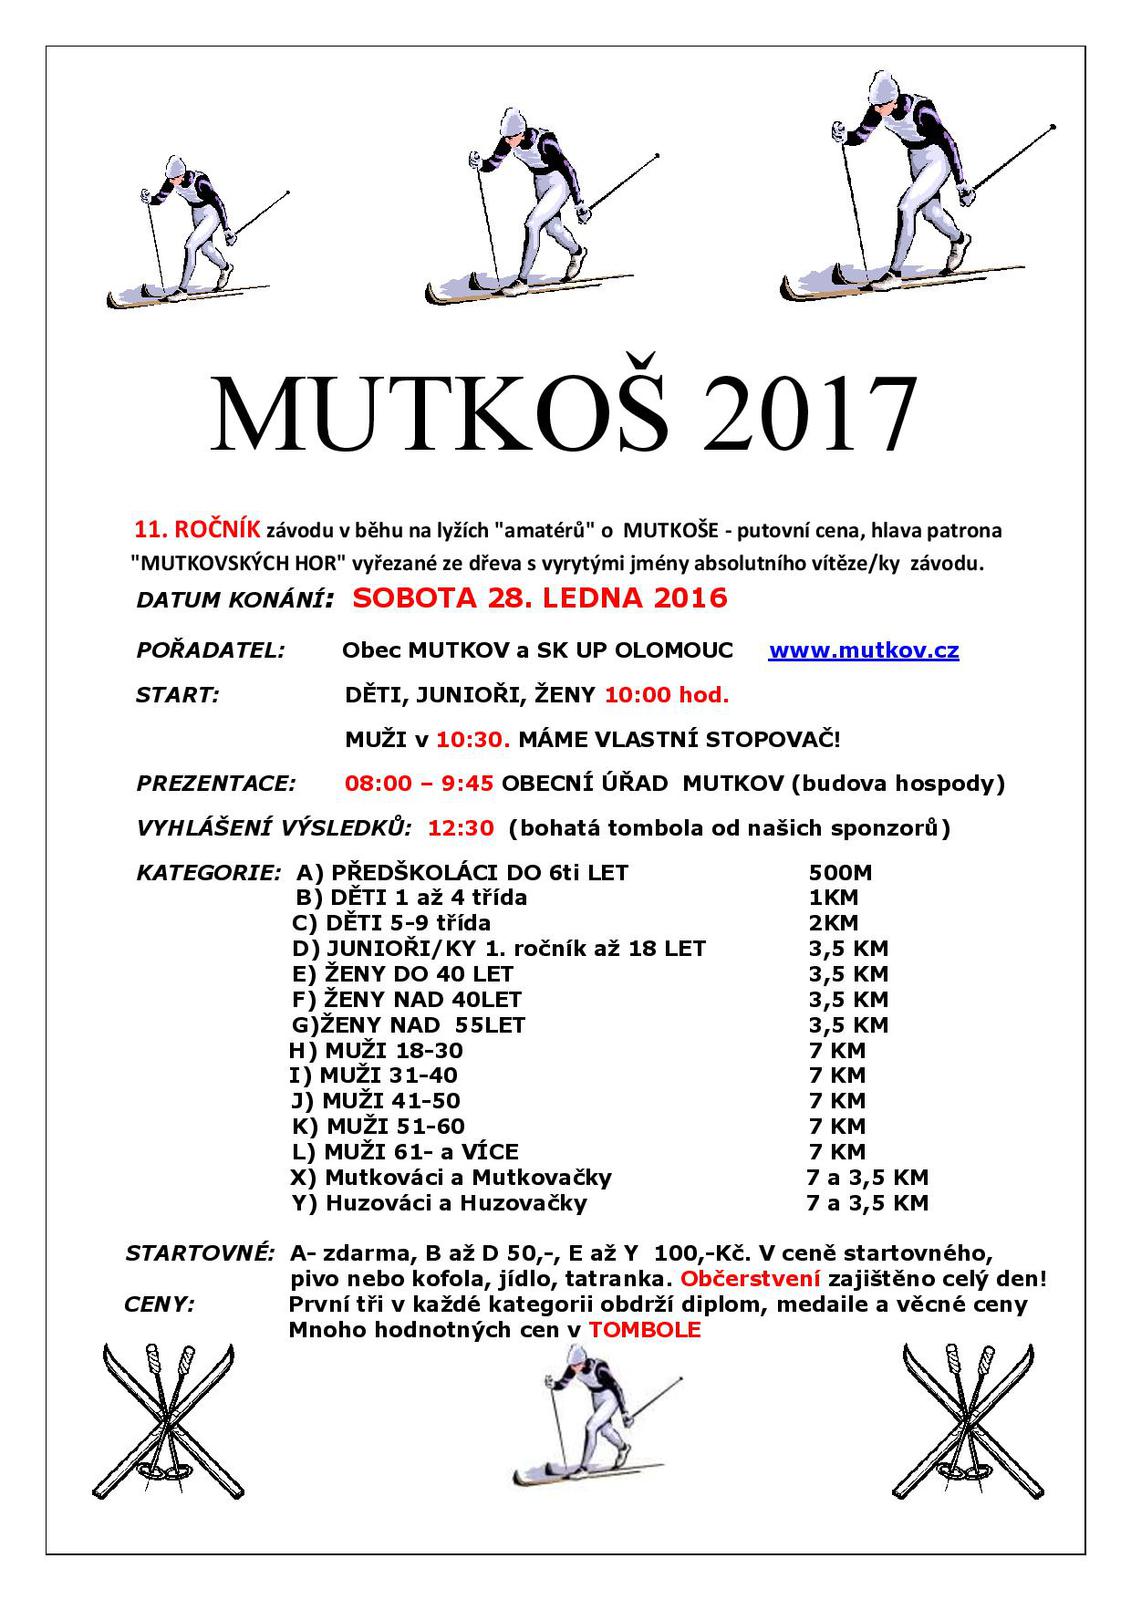 MUTKOS 2017-page-001.jpg